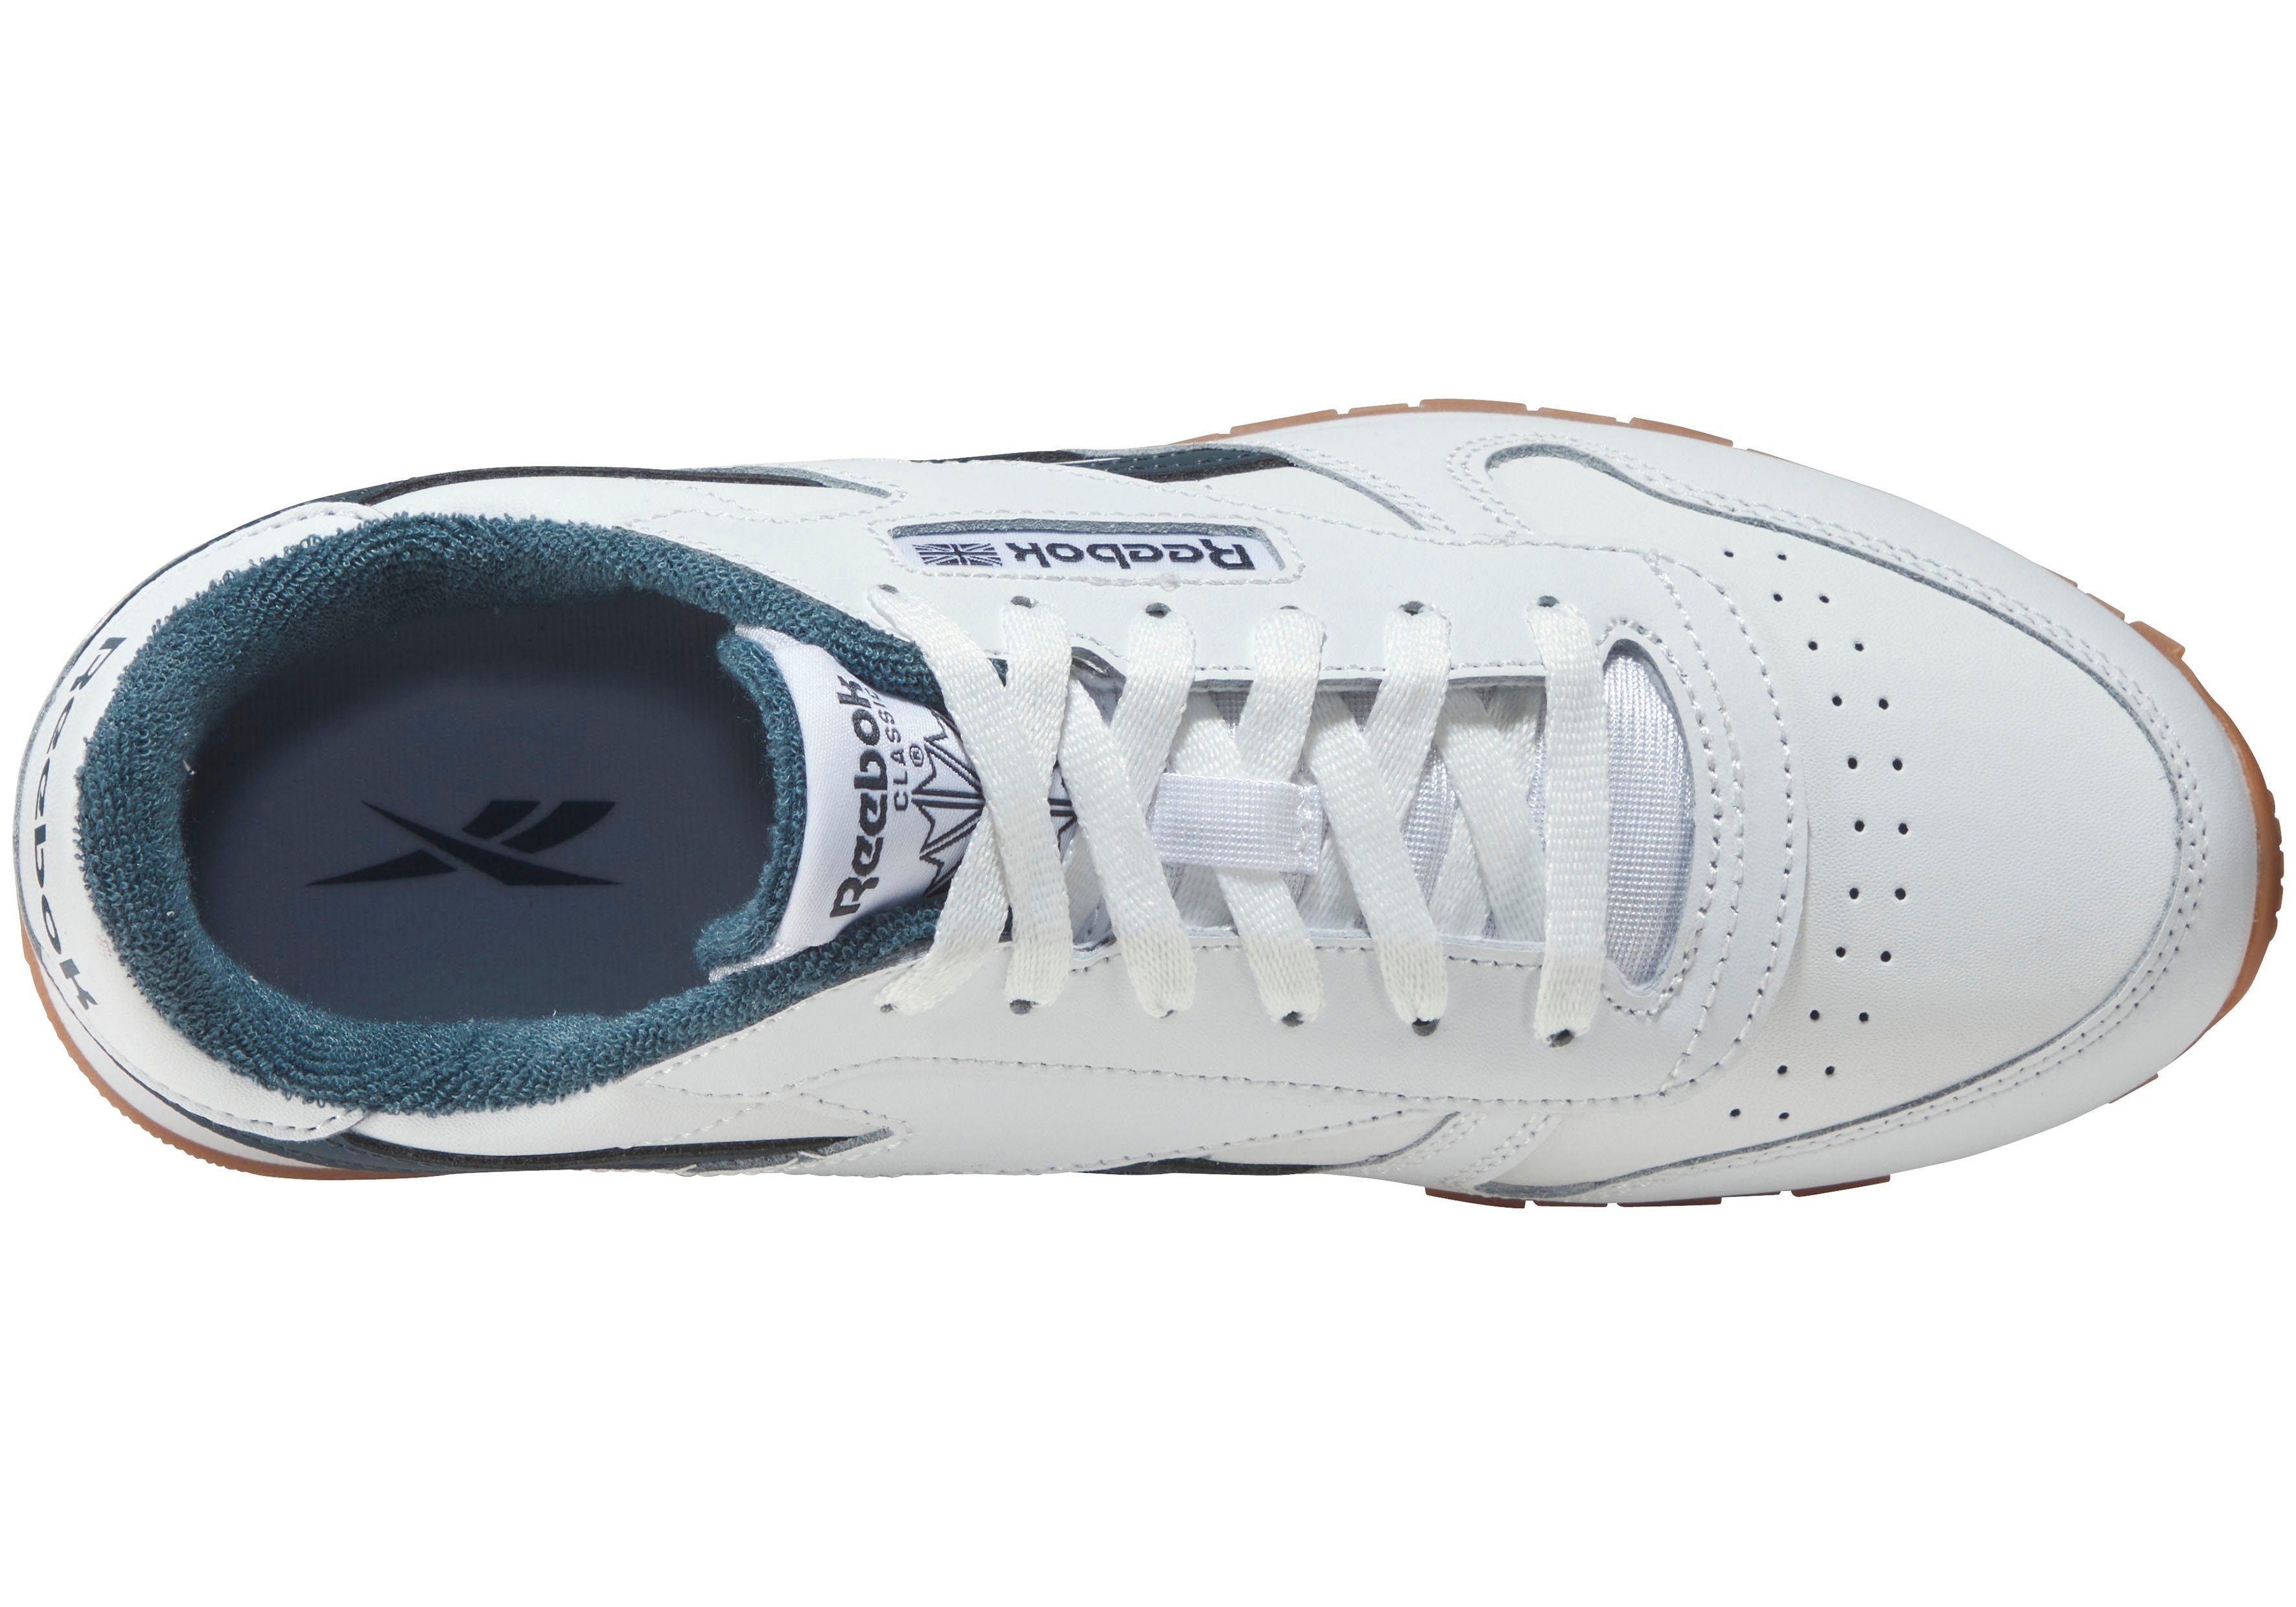 Reebok Classic Sneaker weiß-blau LEATHER CLASSIC